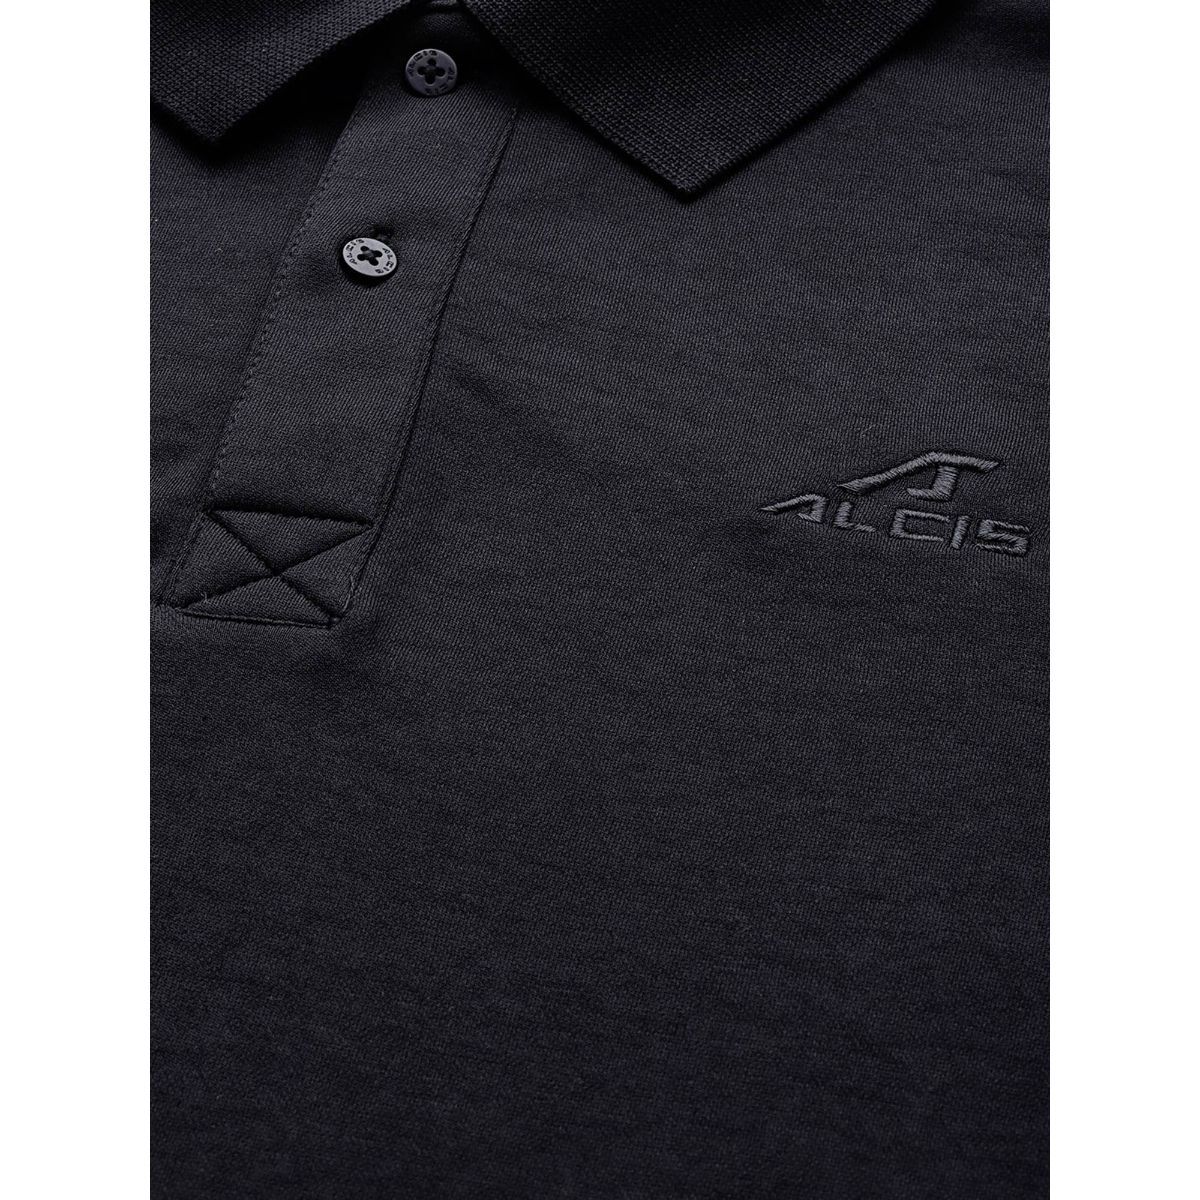 Alcis Men Black Solid Polo Collar T-Shirt (S): Buy Alcis Men Black ...